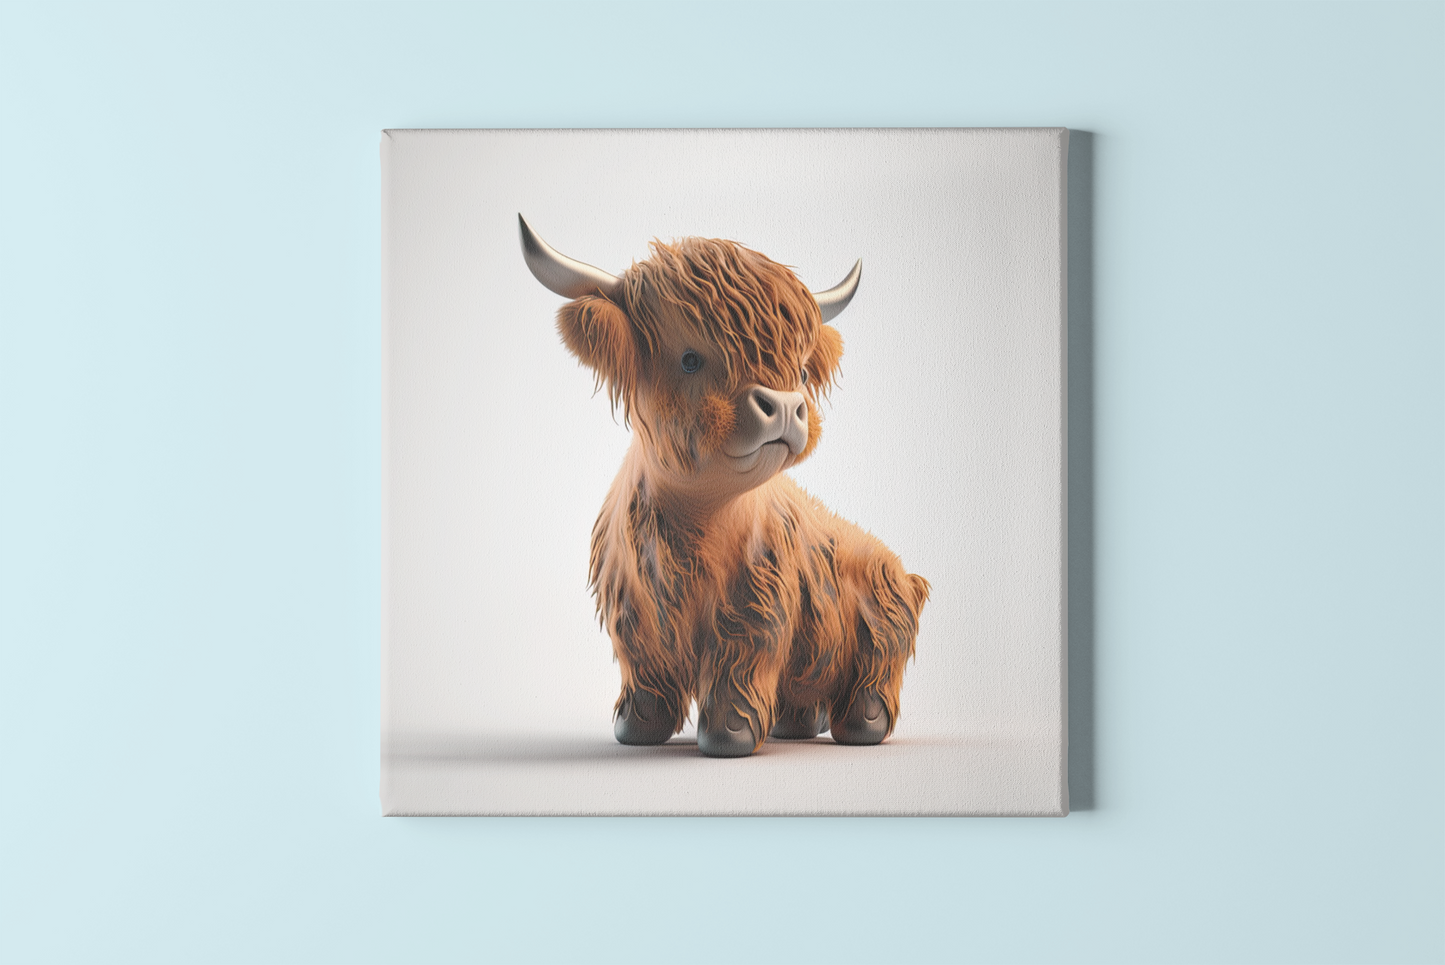 Playful Moos: Meet Ziggy - Highland Cow Kids Collection